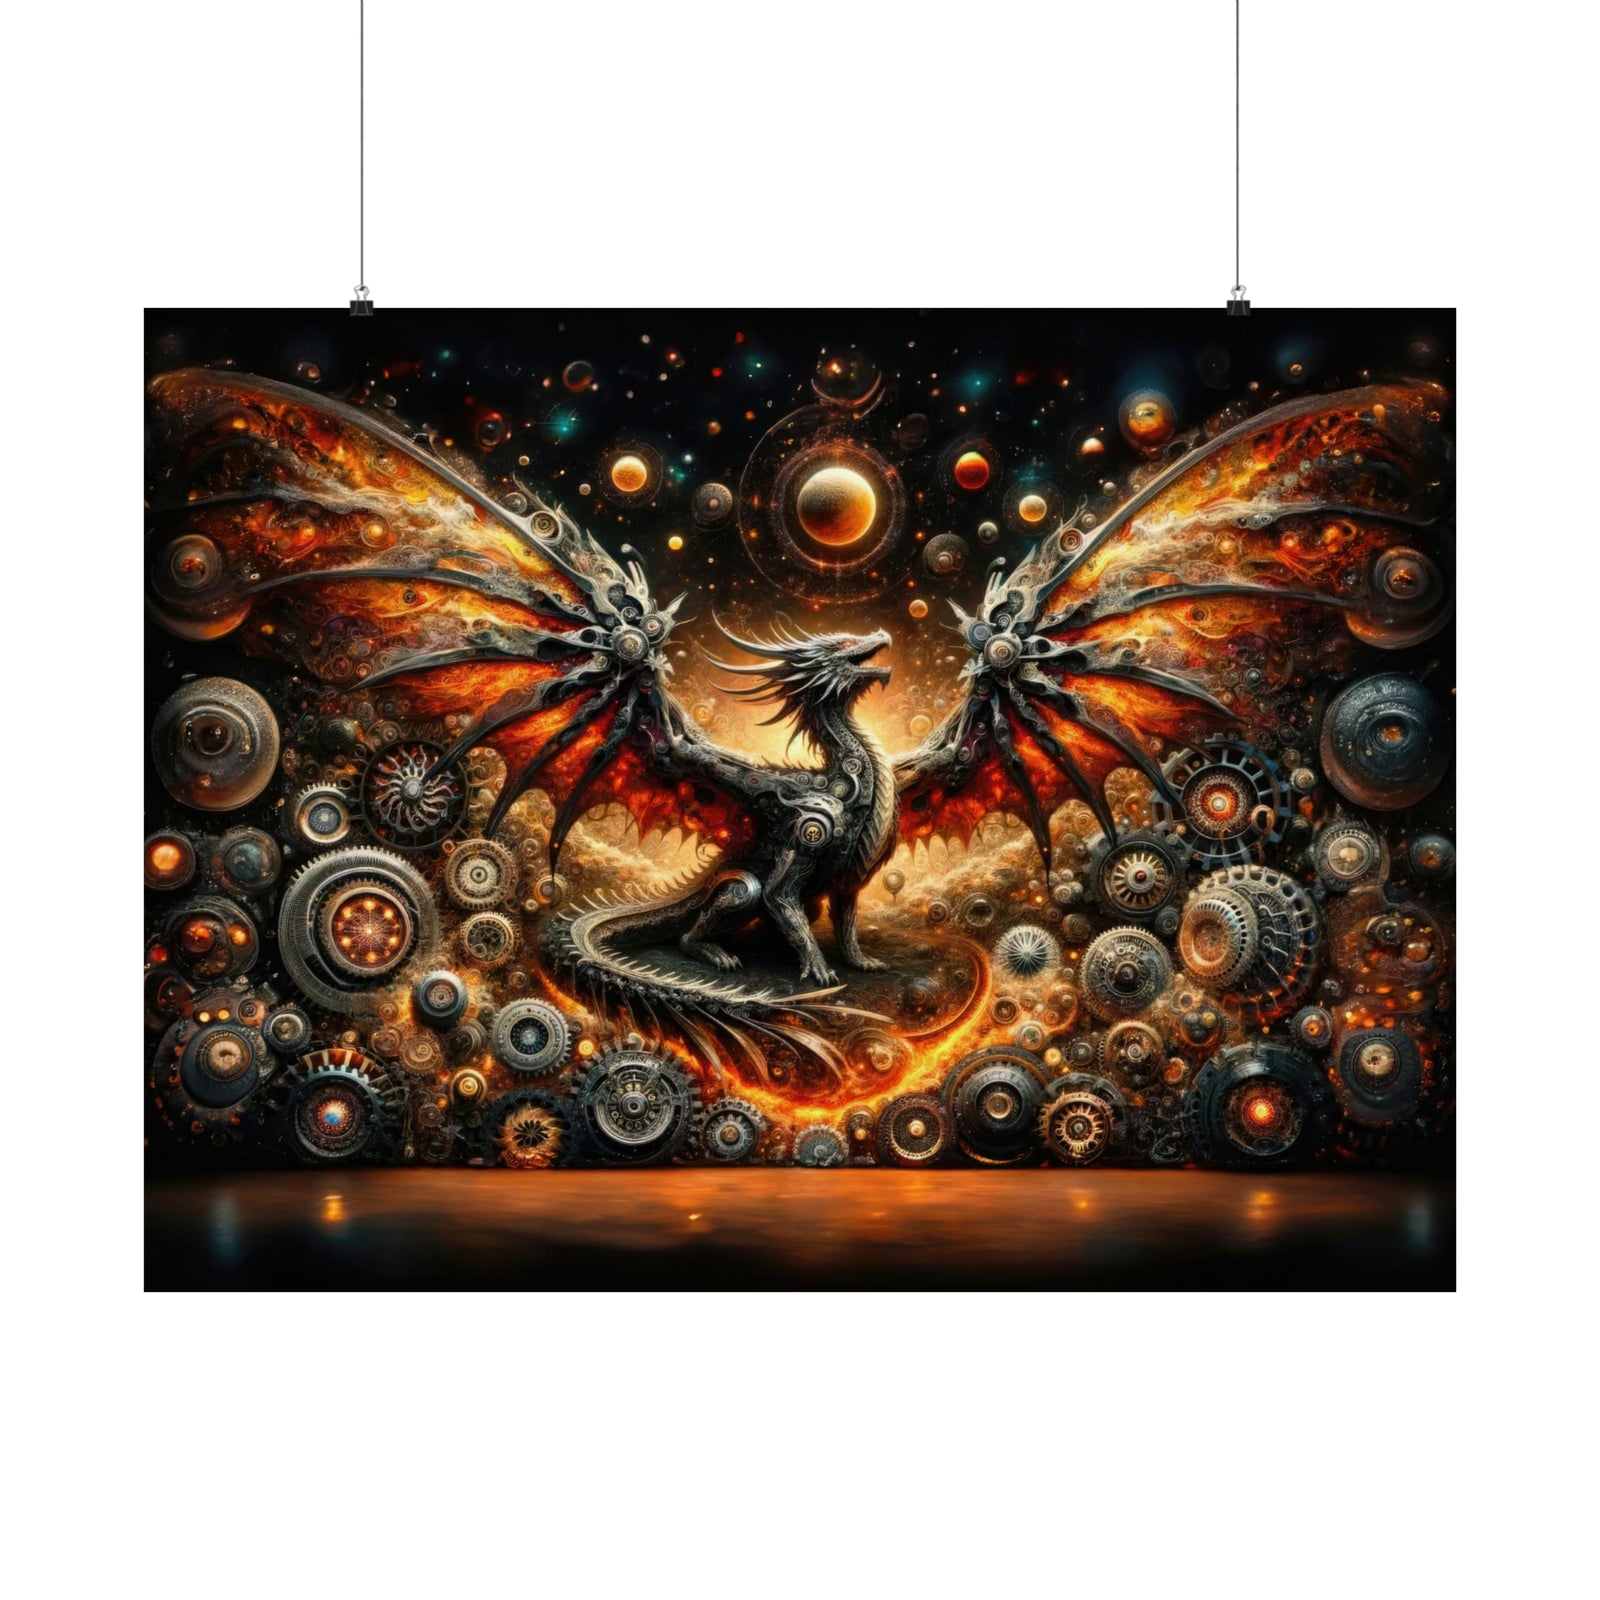 Le dragon automate Poster